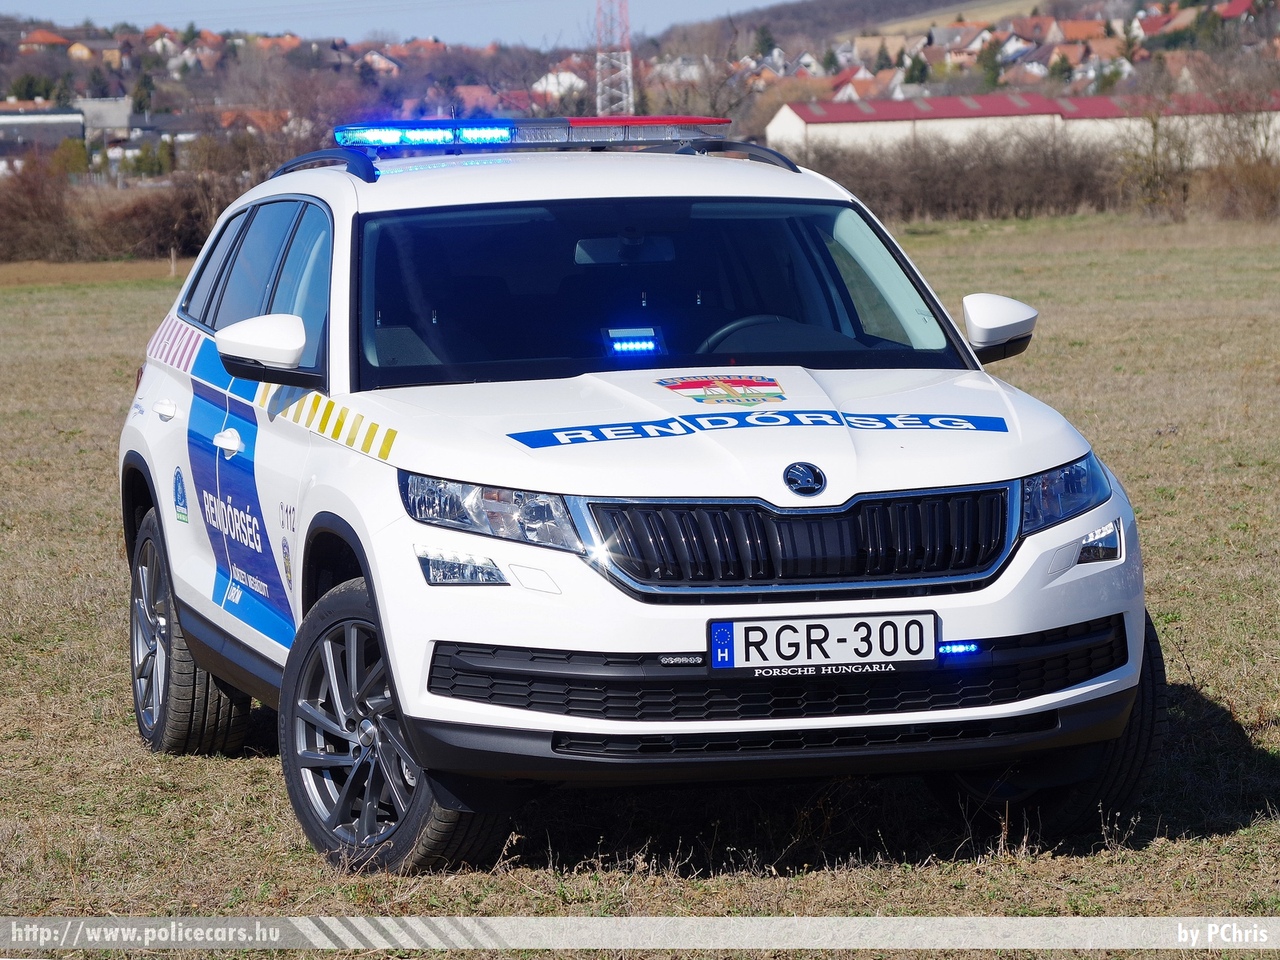 Skoda Kodiaq 4x4, fotó: PChris
Keywords: rendőr rendőrautó rendőrség magyar Magyarország hungarian Hungary police policecar RGR-300